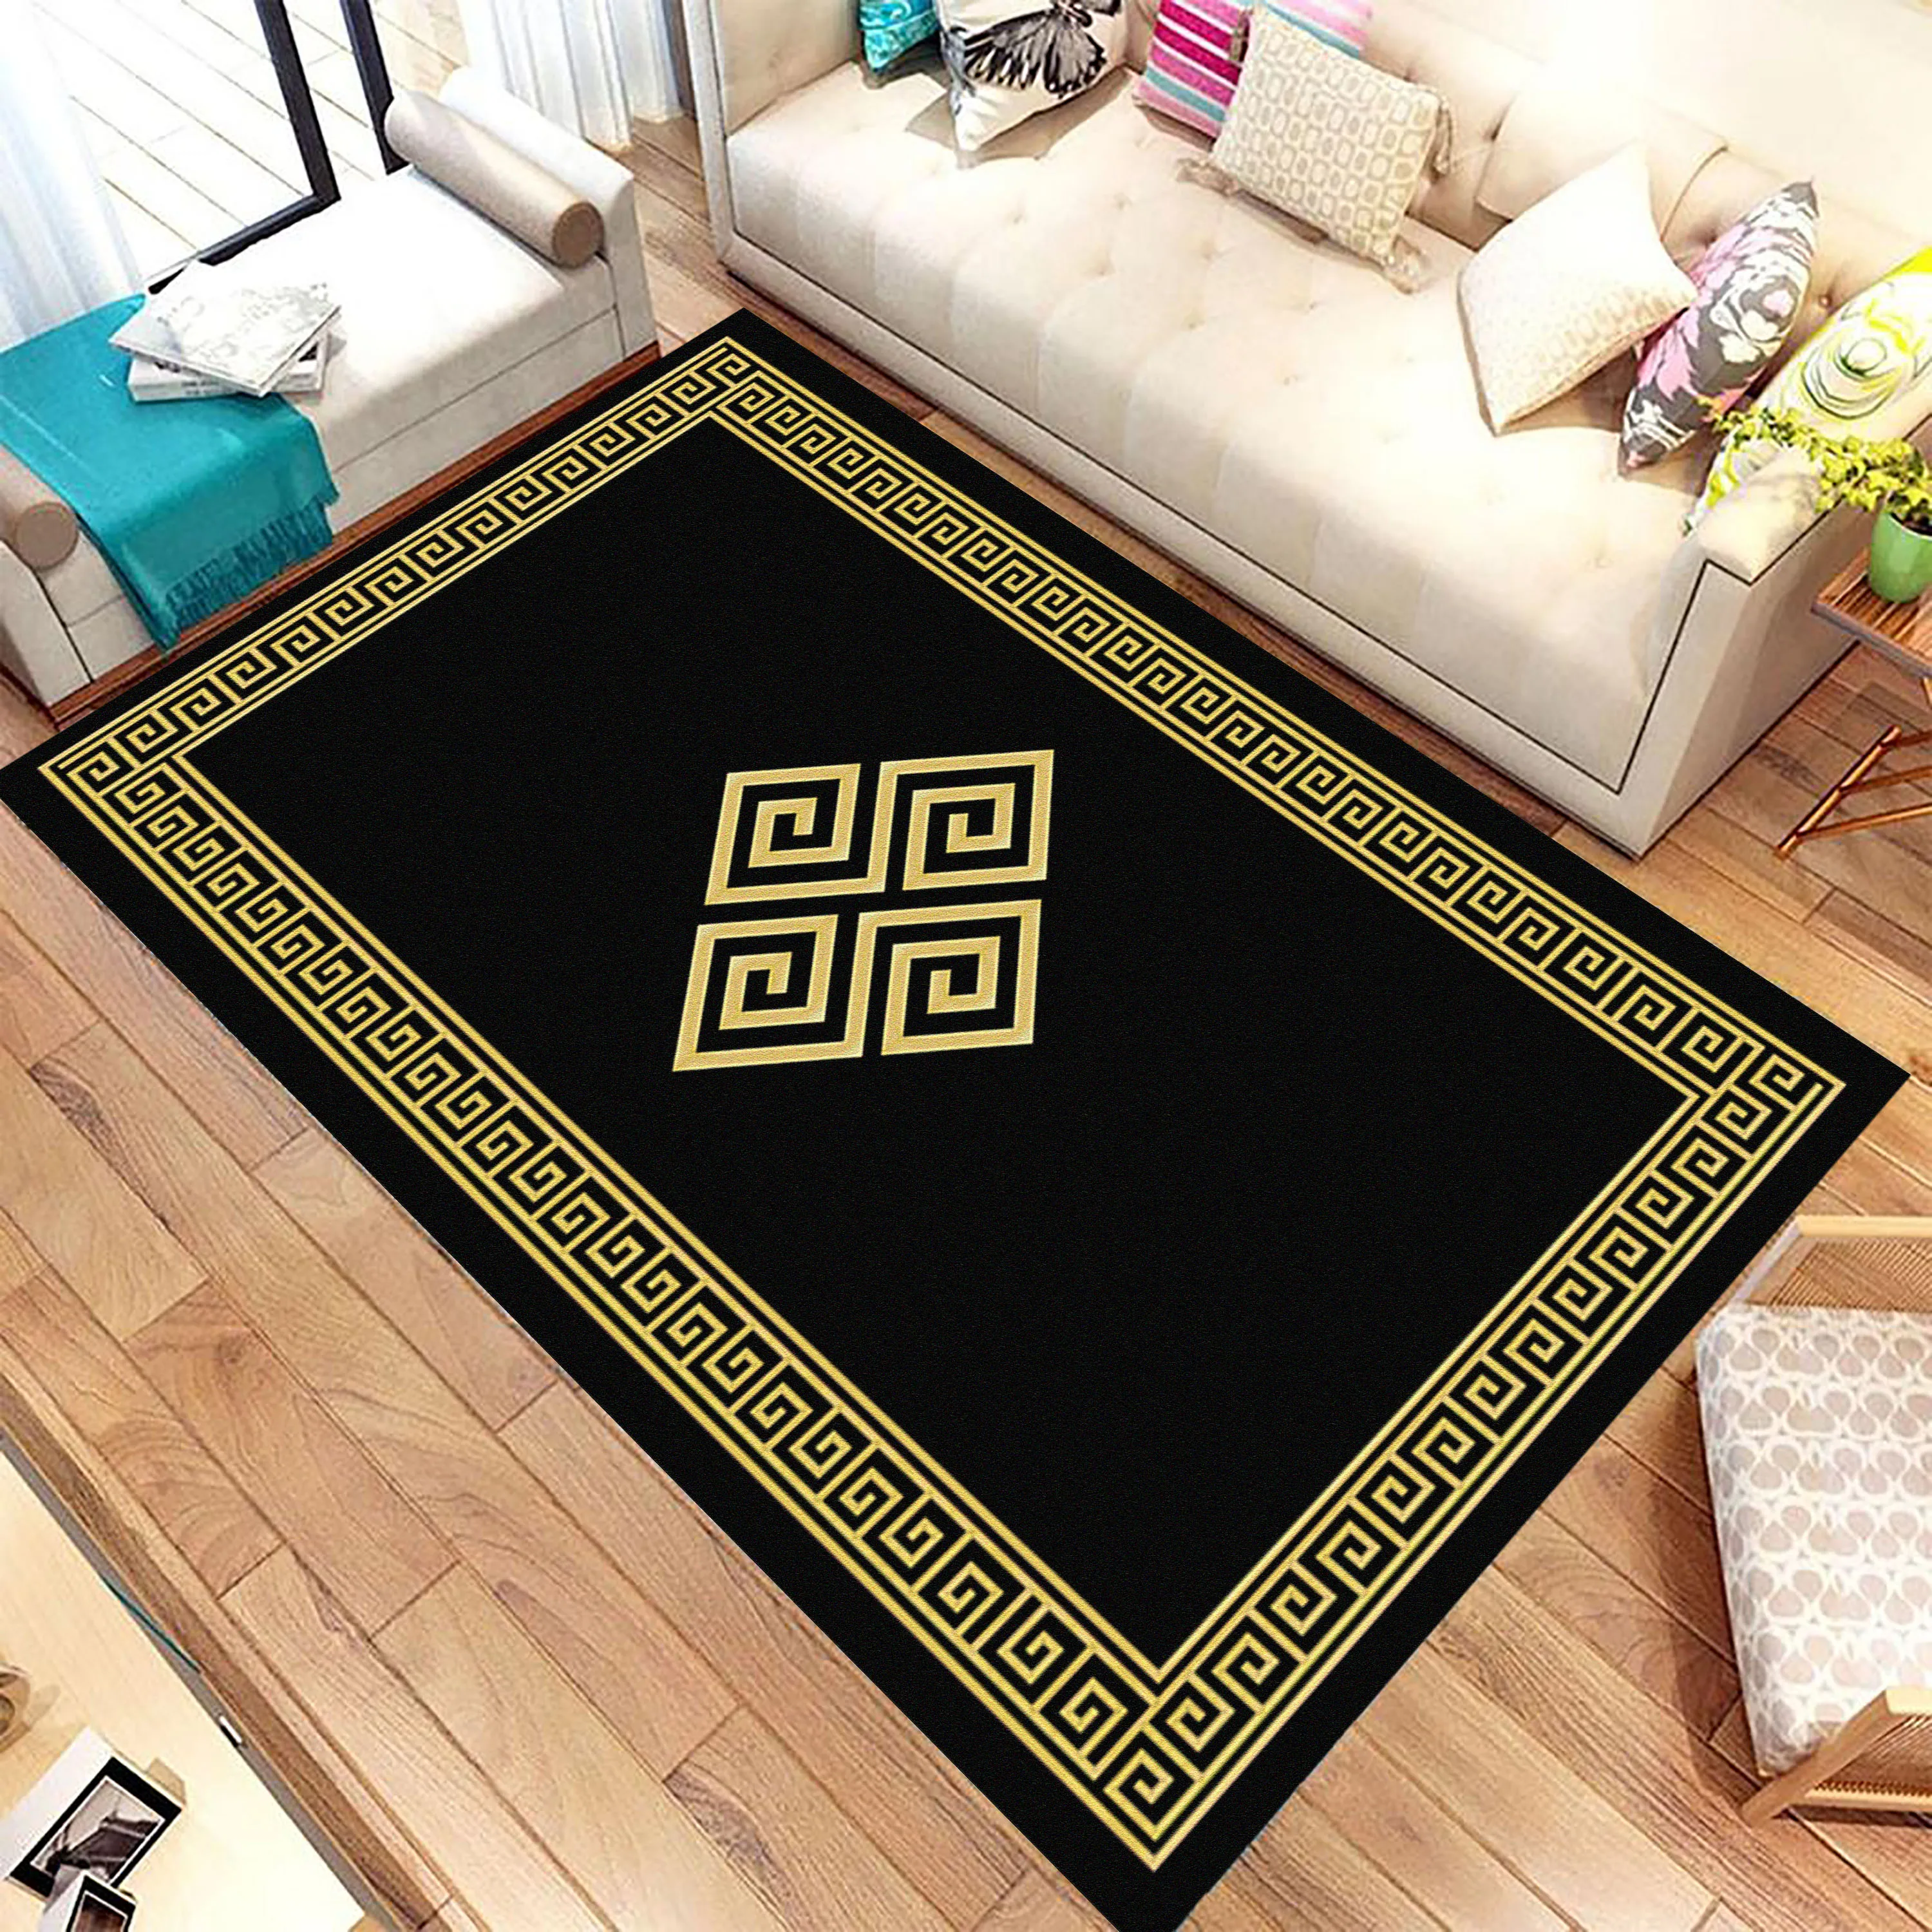 

Woven Turkish Gold Black Area Rug Fashion Carpet Floor Soft Modern Decoration Home Decor Thick Runner Durable Kilim